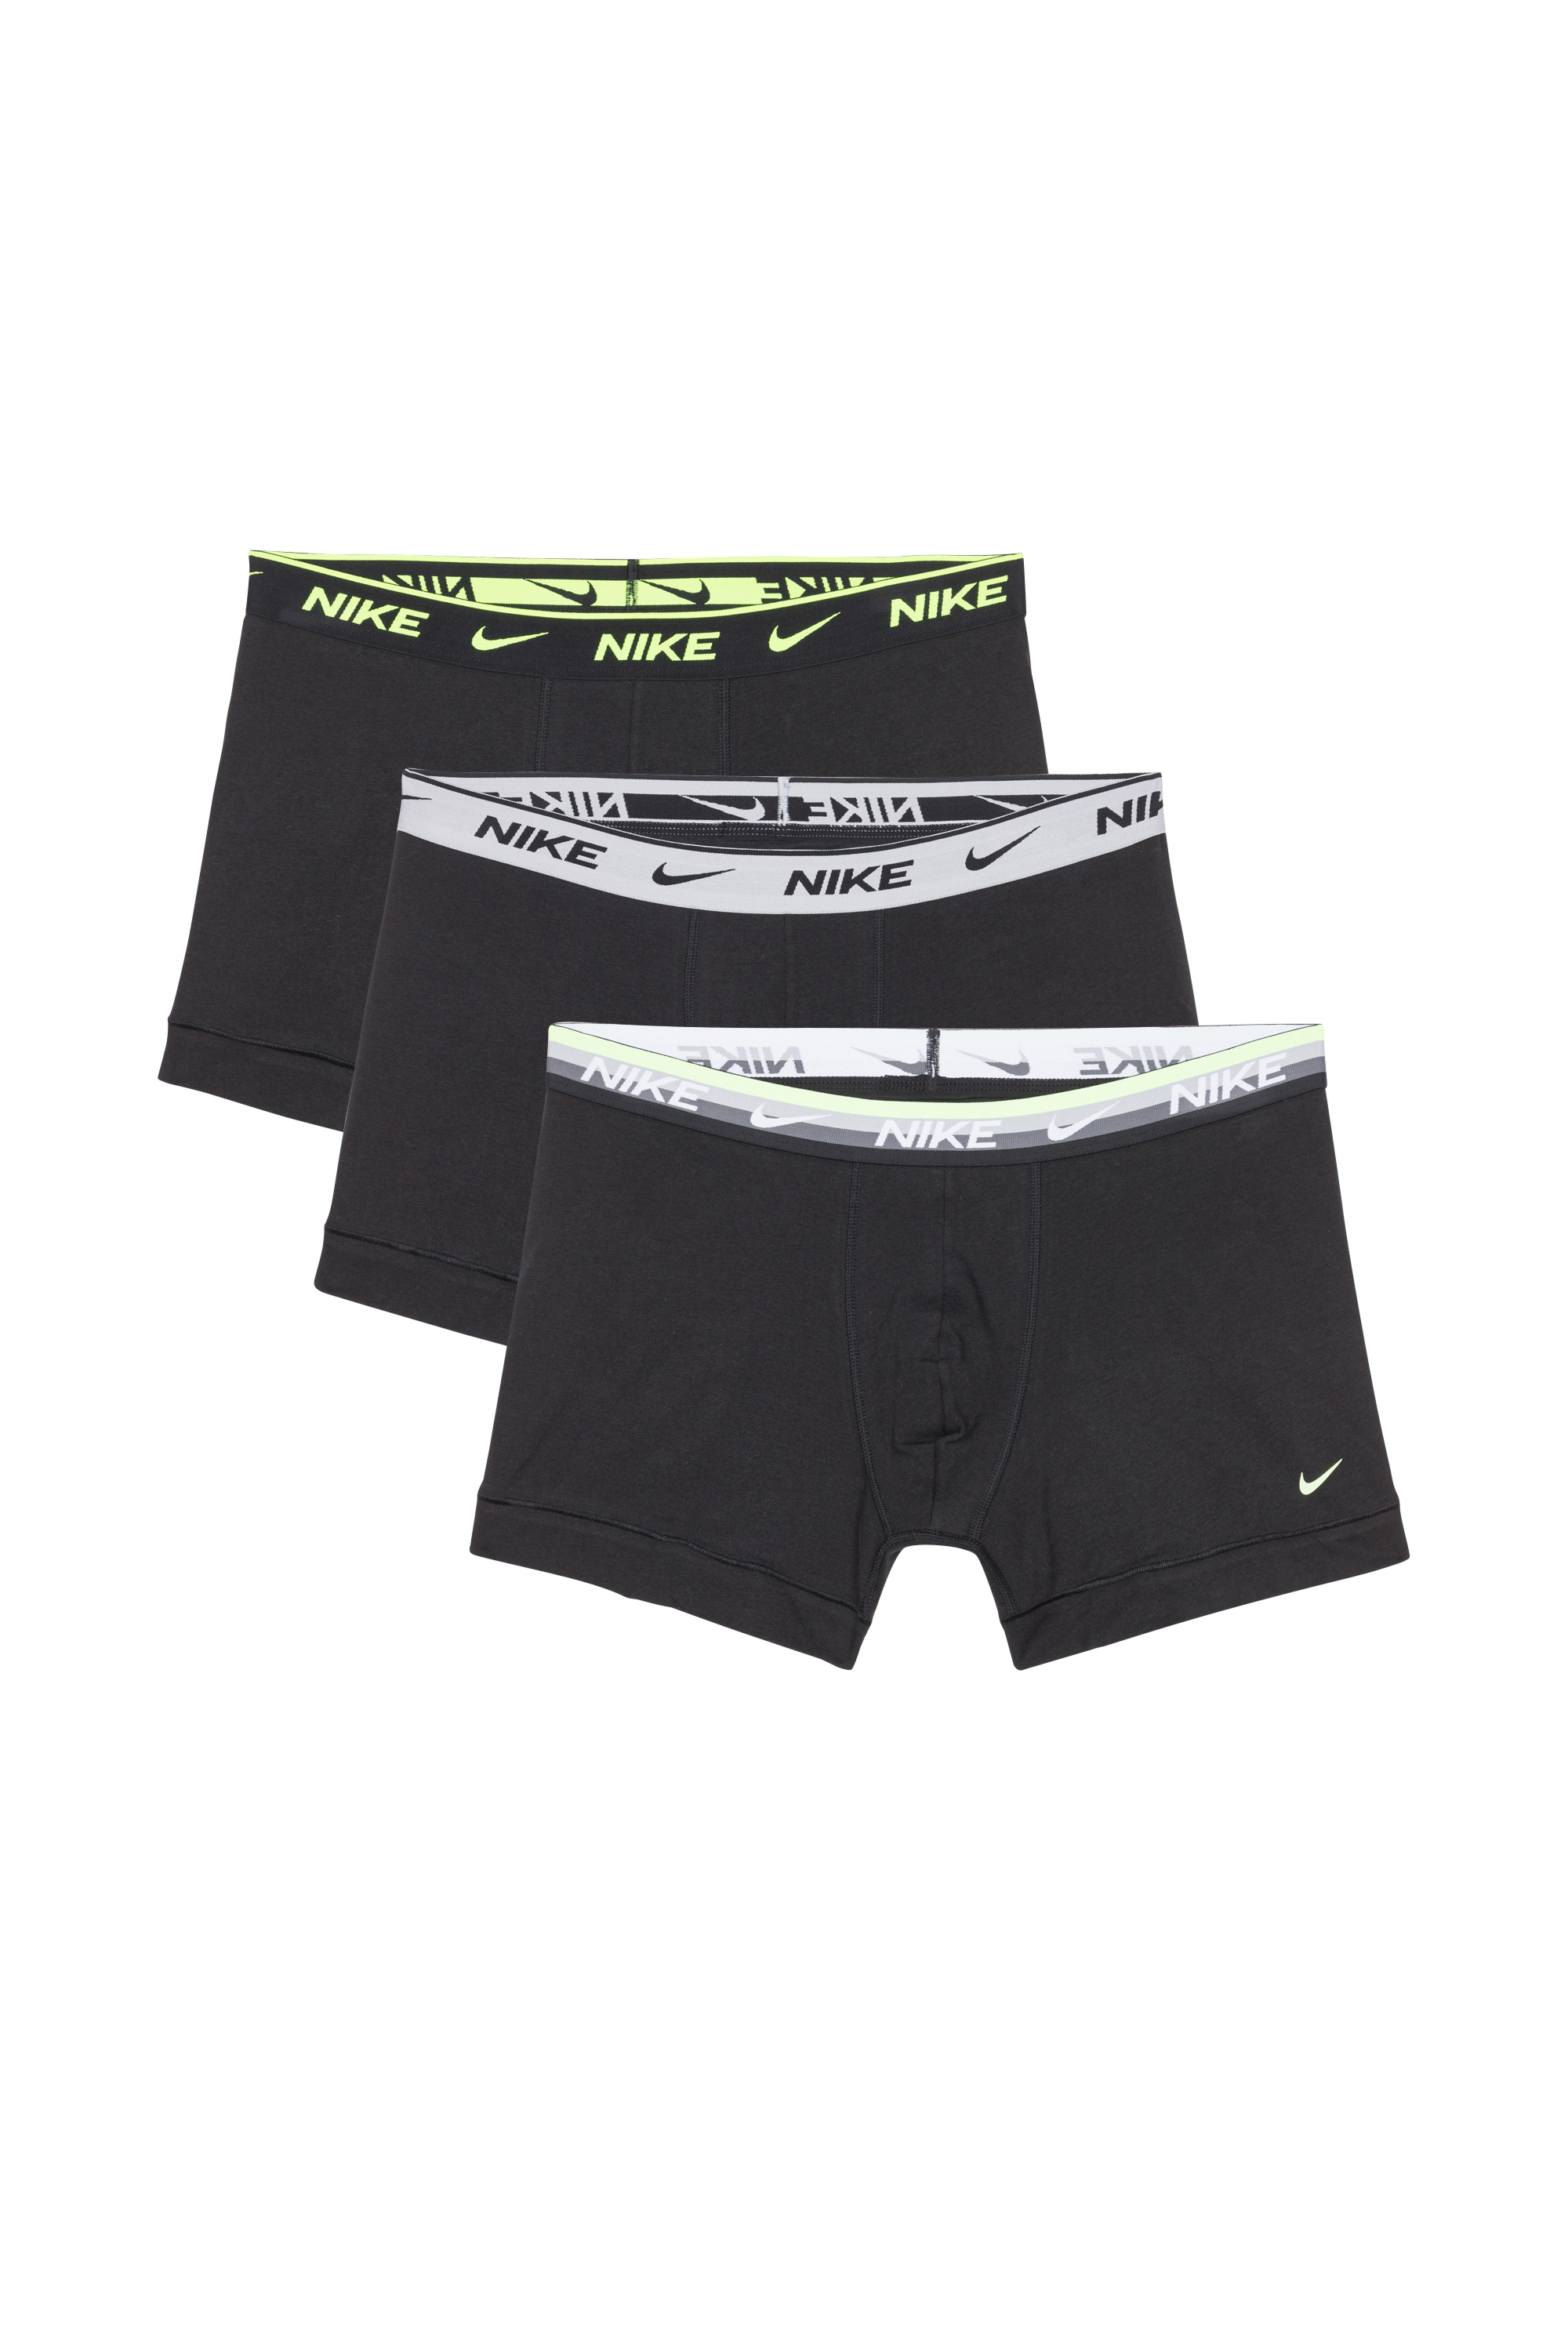 Nike Underwear - Lot de 3 boxers - Taille L